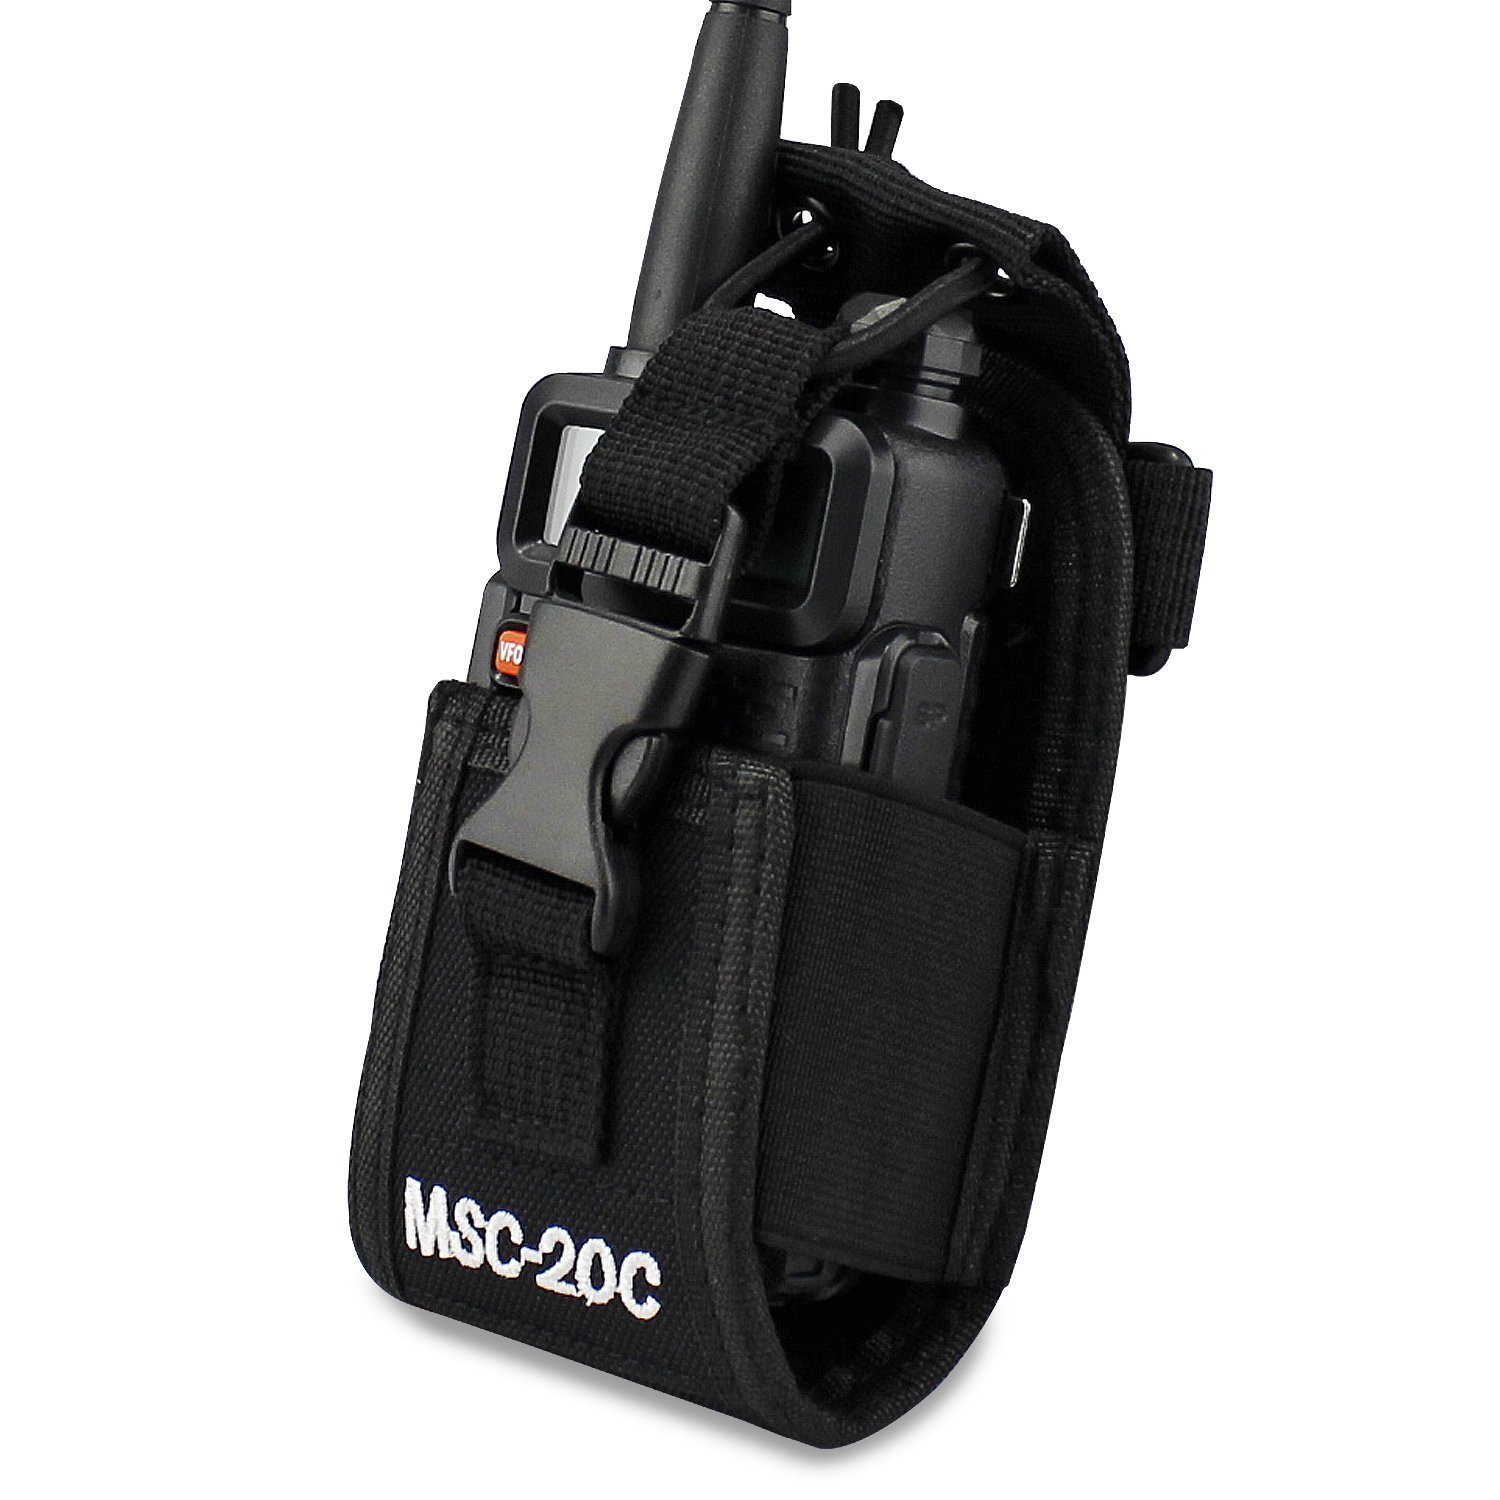 abcGoodefg 3 in1 Radio Holder Holster Case Pouch Bag for GPS Kenwood Motorola baofeng UV5R UV82 UV5RA 888S Retevis H777 Two Way Radio Walkie Talkie MSC 20C (2Pack)